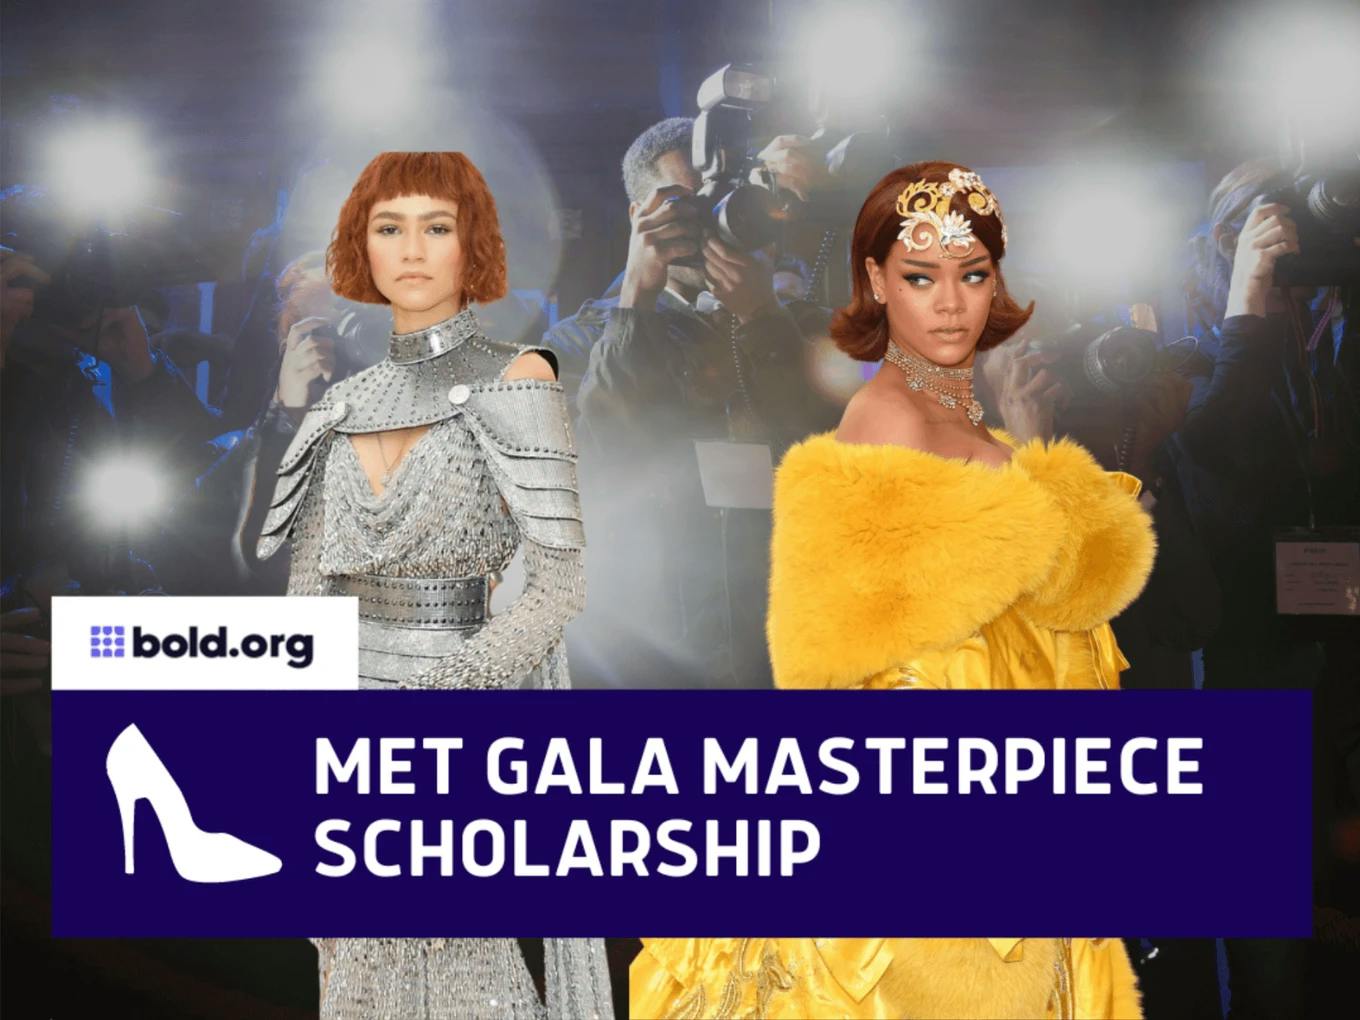 Met Gala Masterpiece Scholarship